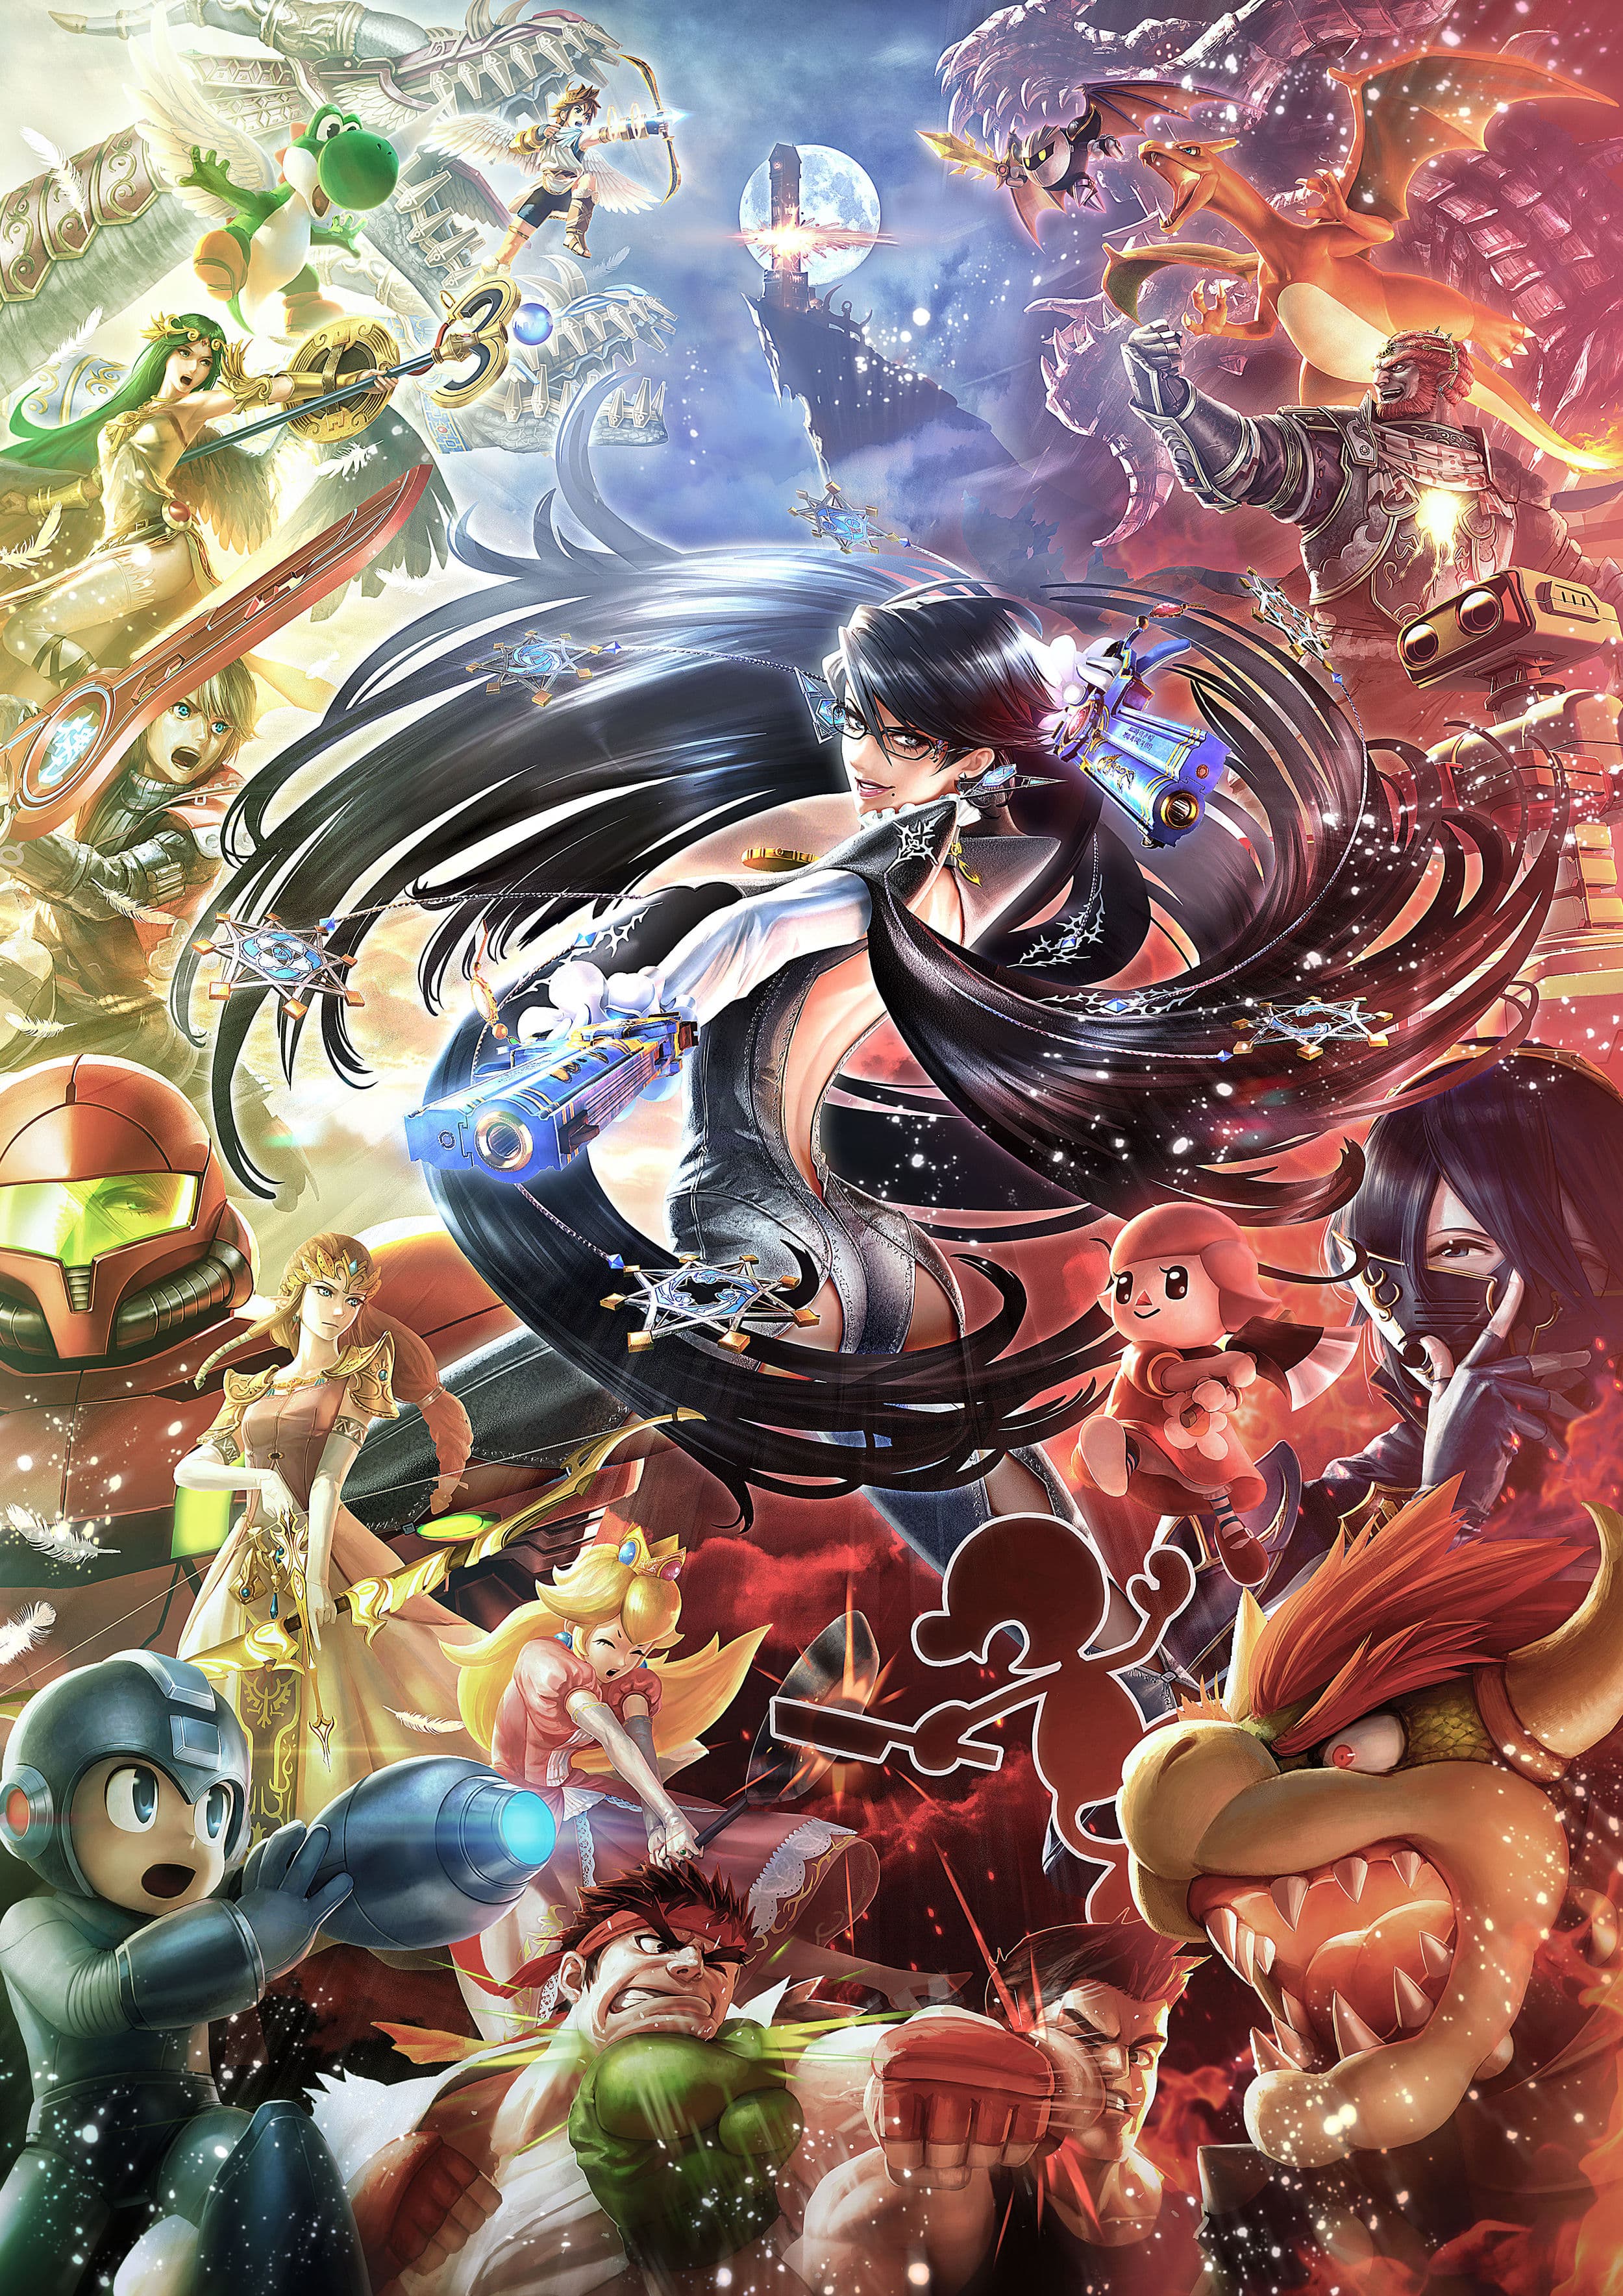 Super Smash Bros Wii U and 3DS Bayonetta Artwork